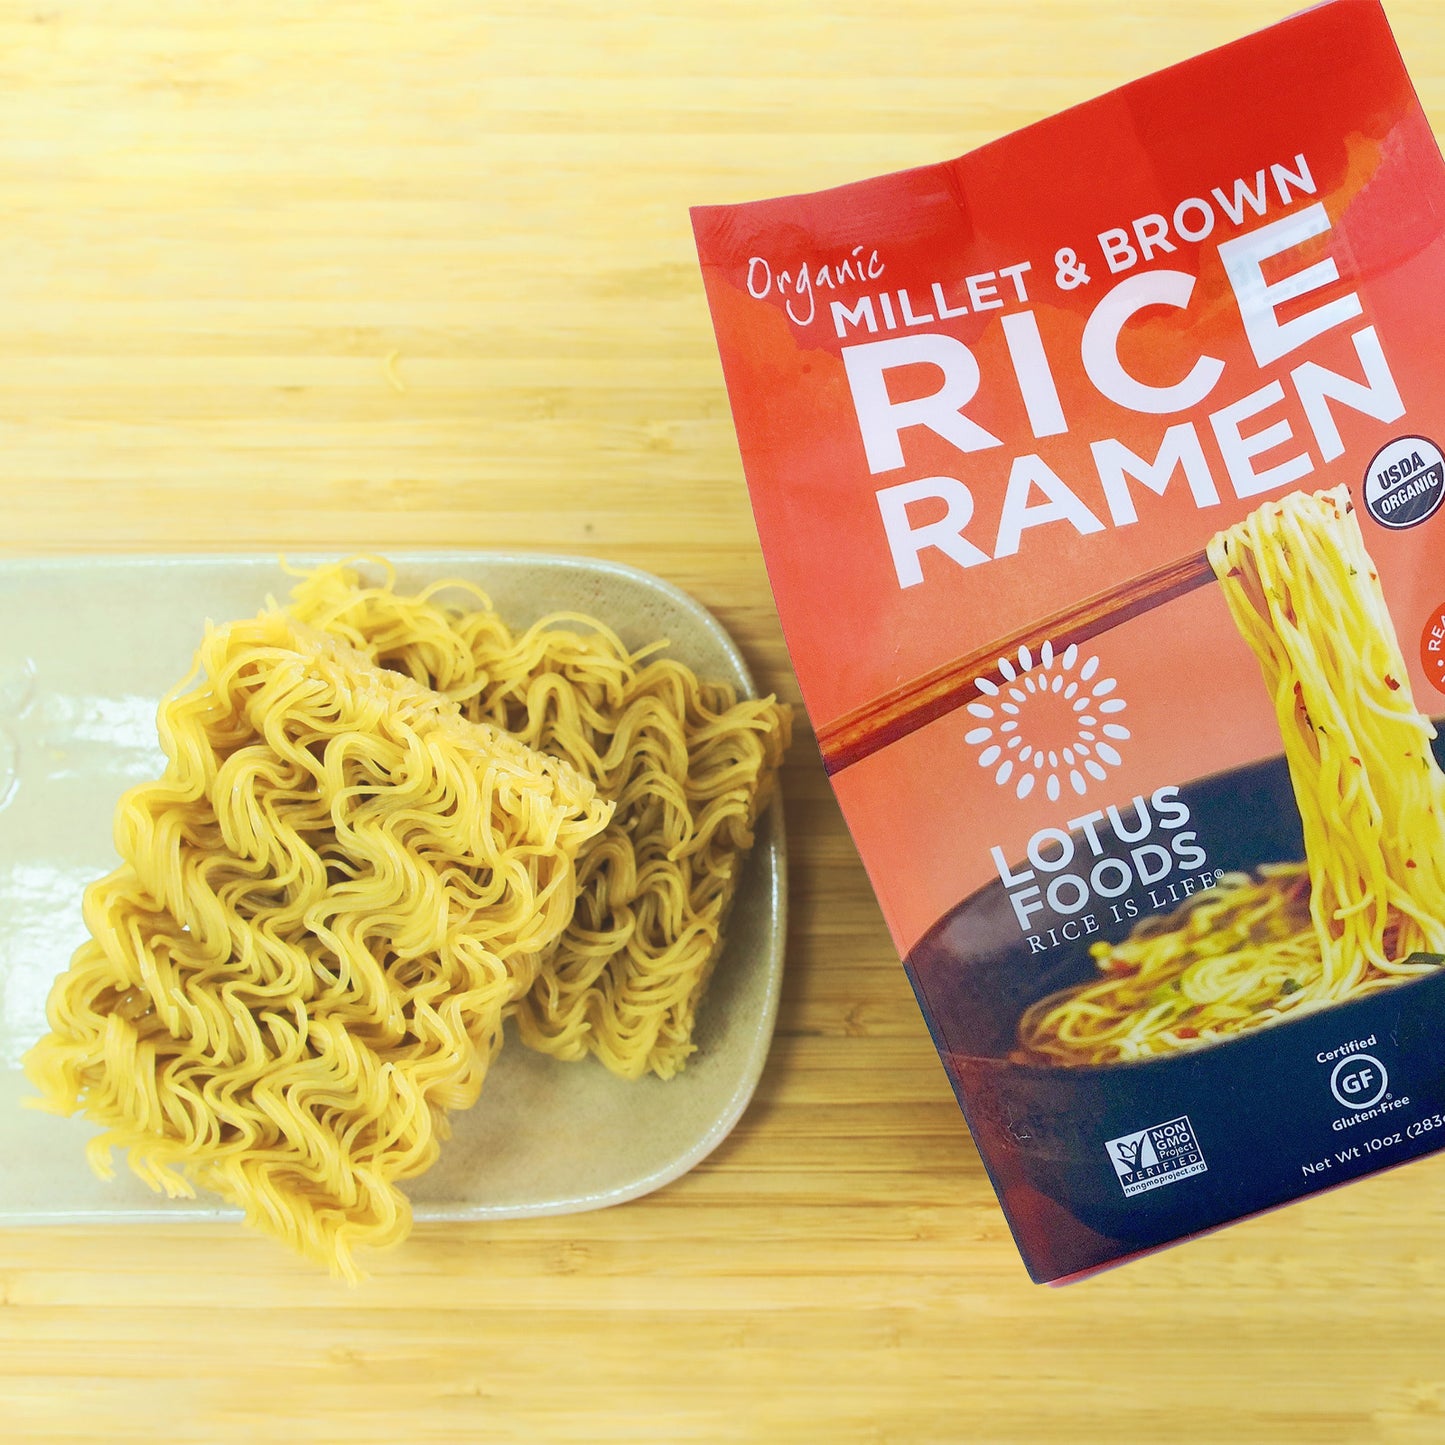 Organic Millet & Brown Rice Ramen（雑穀&玄米ラーメン）